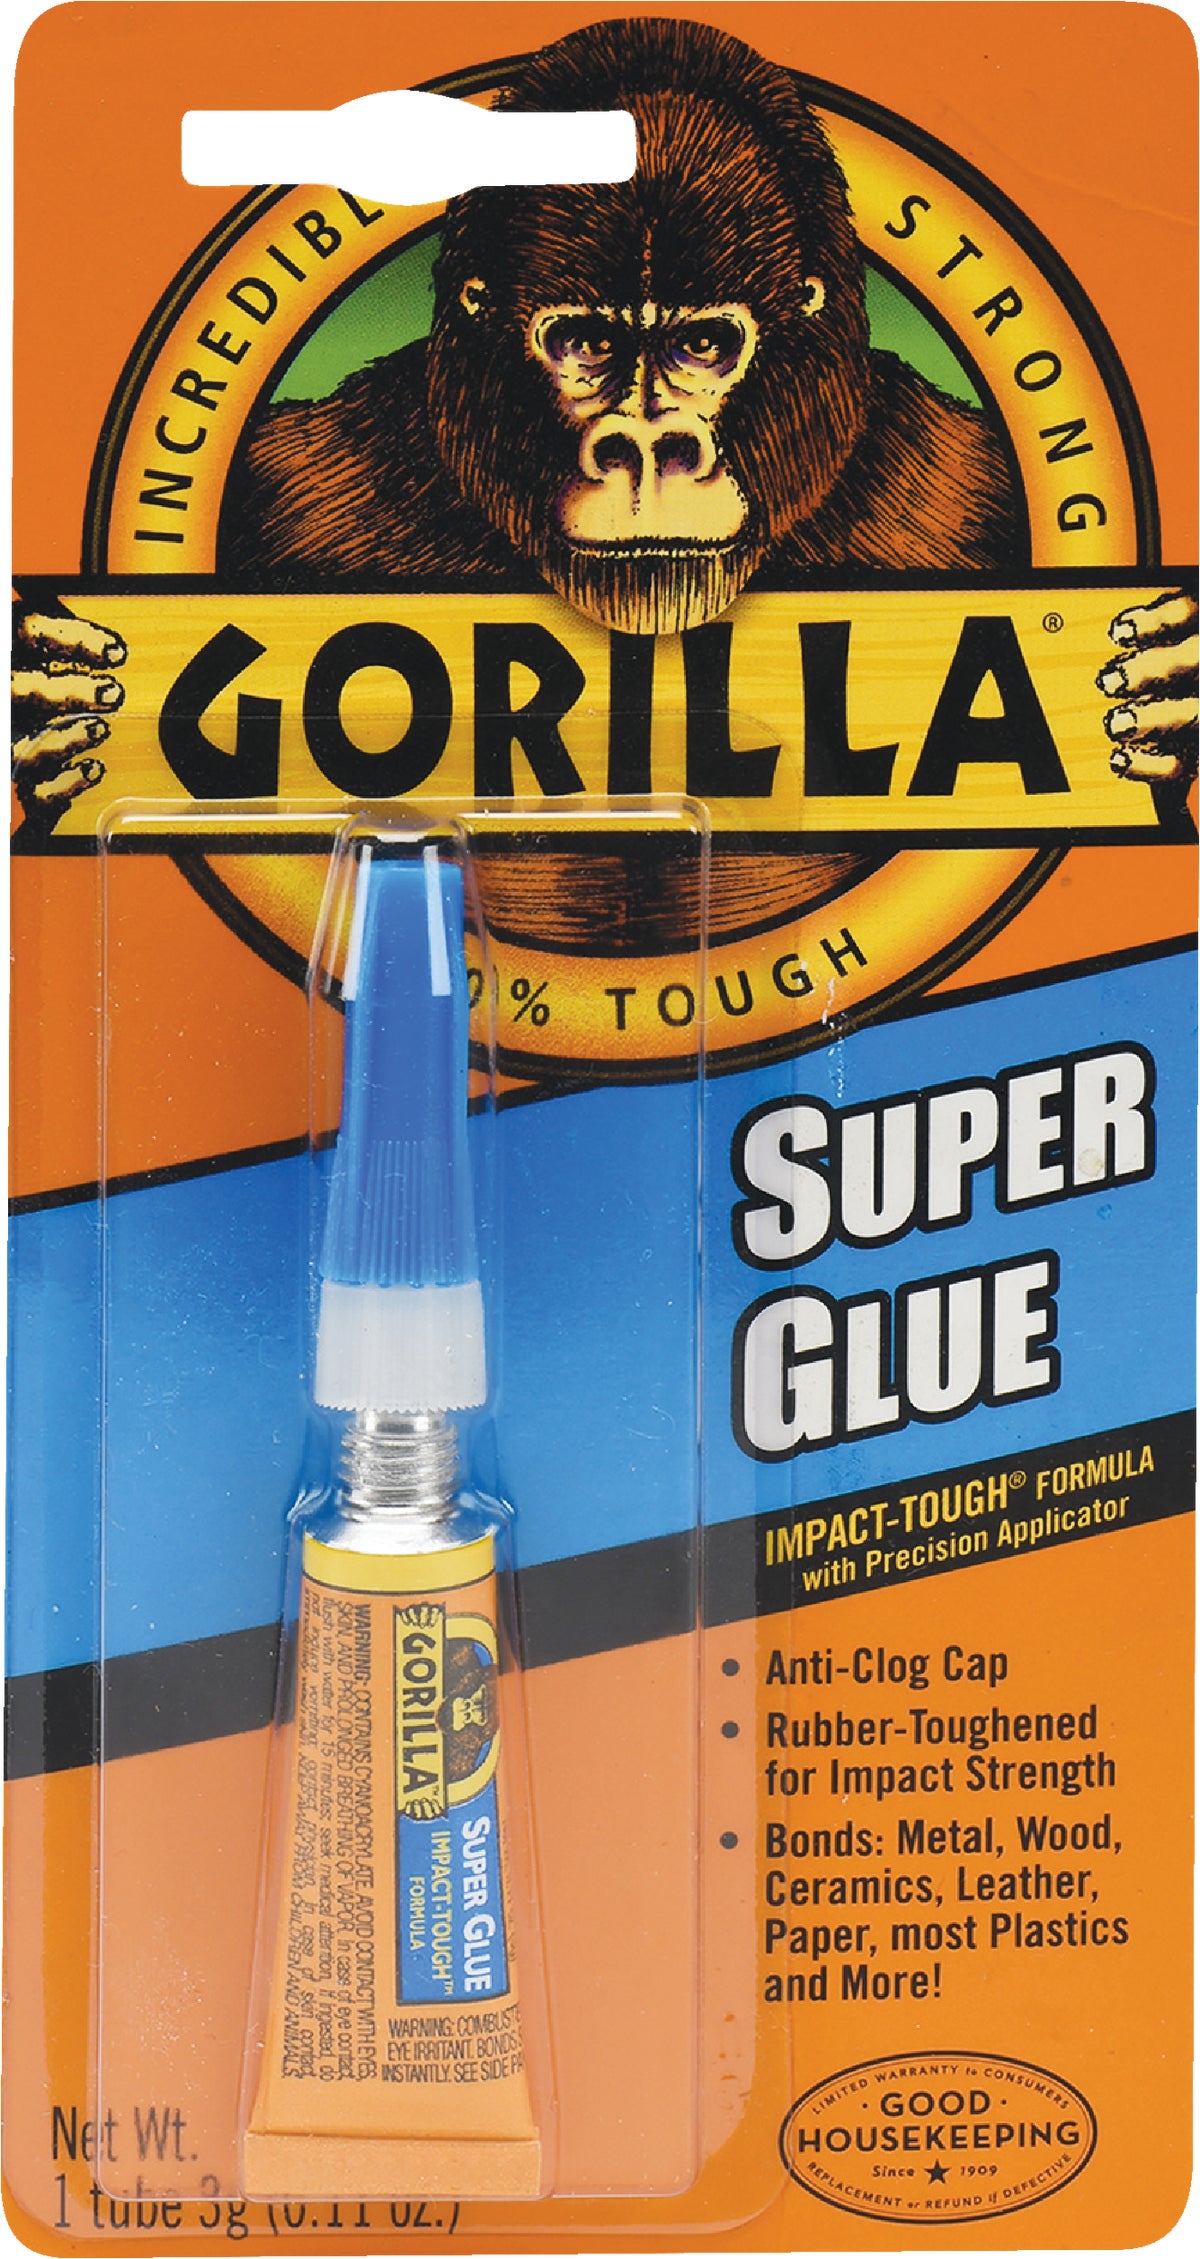 Buy Krazy Glue All-Purpose Super Glue 0.11 Oz.